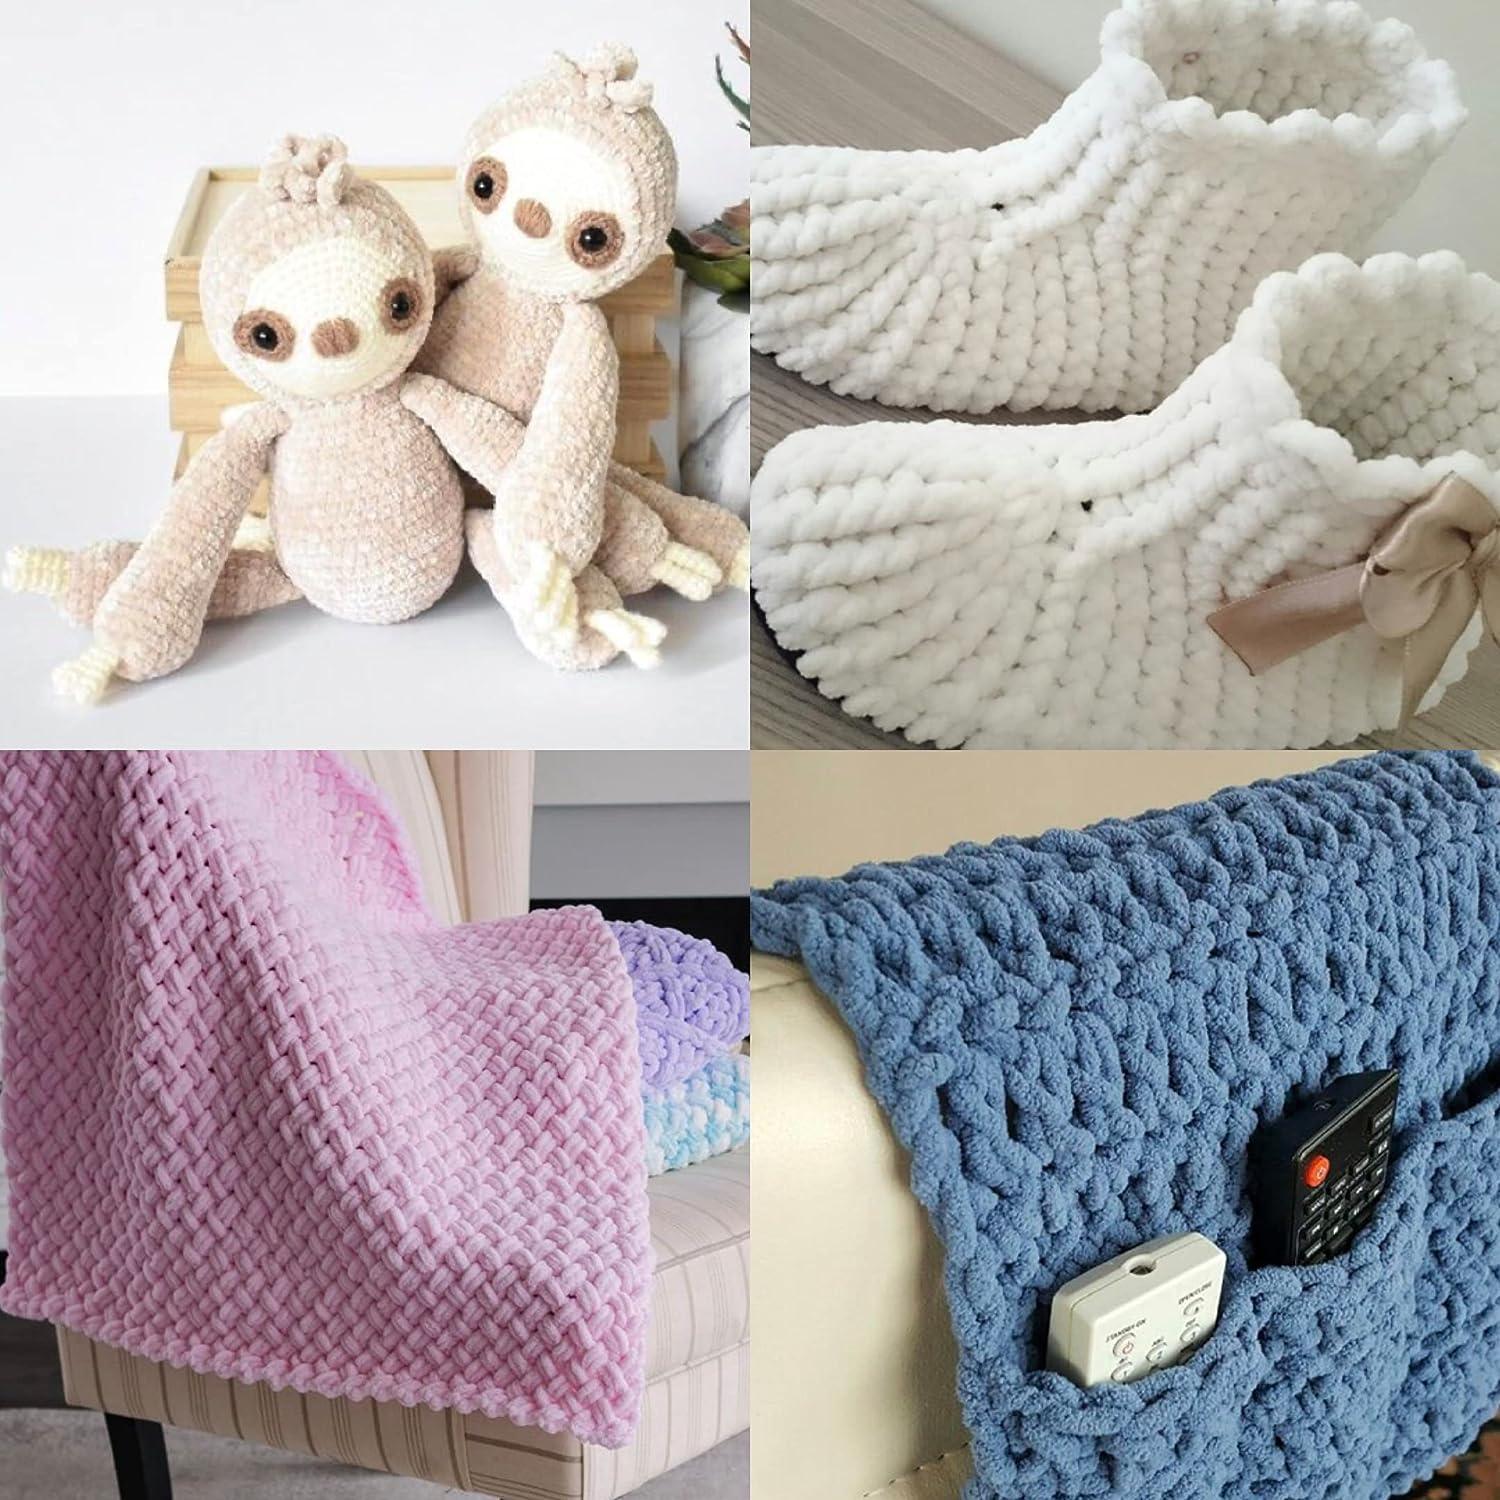  Sensy Velvet Yarn for Crocheting, Baby Blanket Yarn, Chenille  Yarn, Amigurumi Yarn, 3.5 oz, 132 Yards, Gauge 5 Bulky (White)